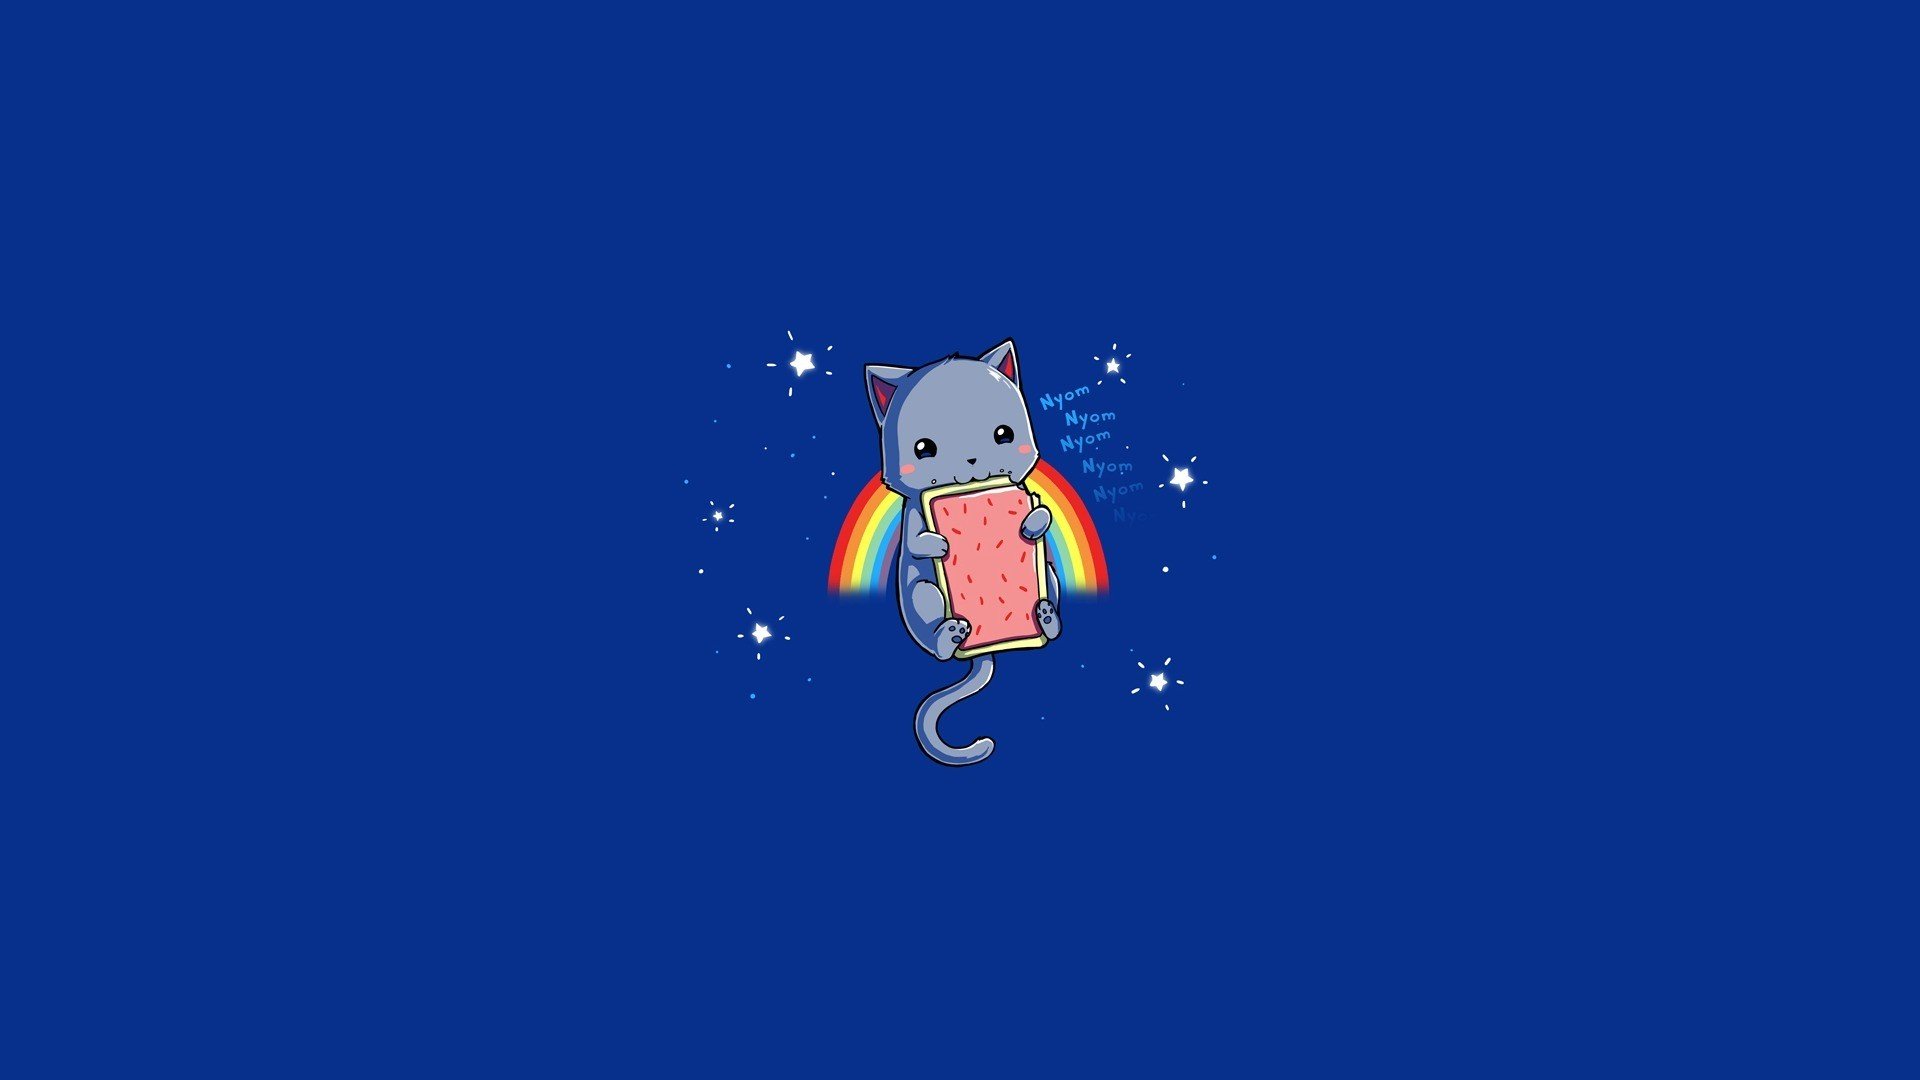  Nyan  Cat  HD  Wallpaper  Background Image 1920x1080 ID 